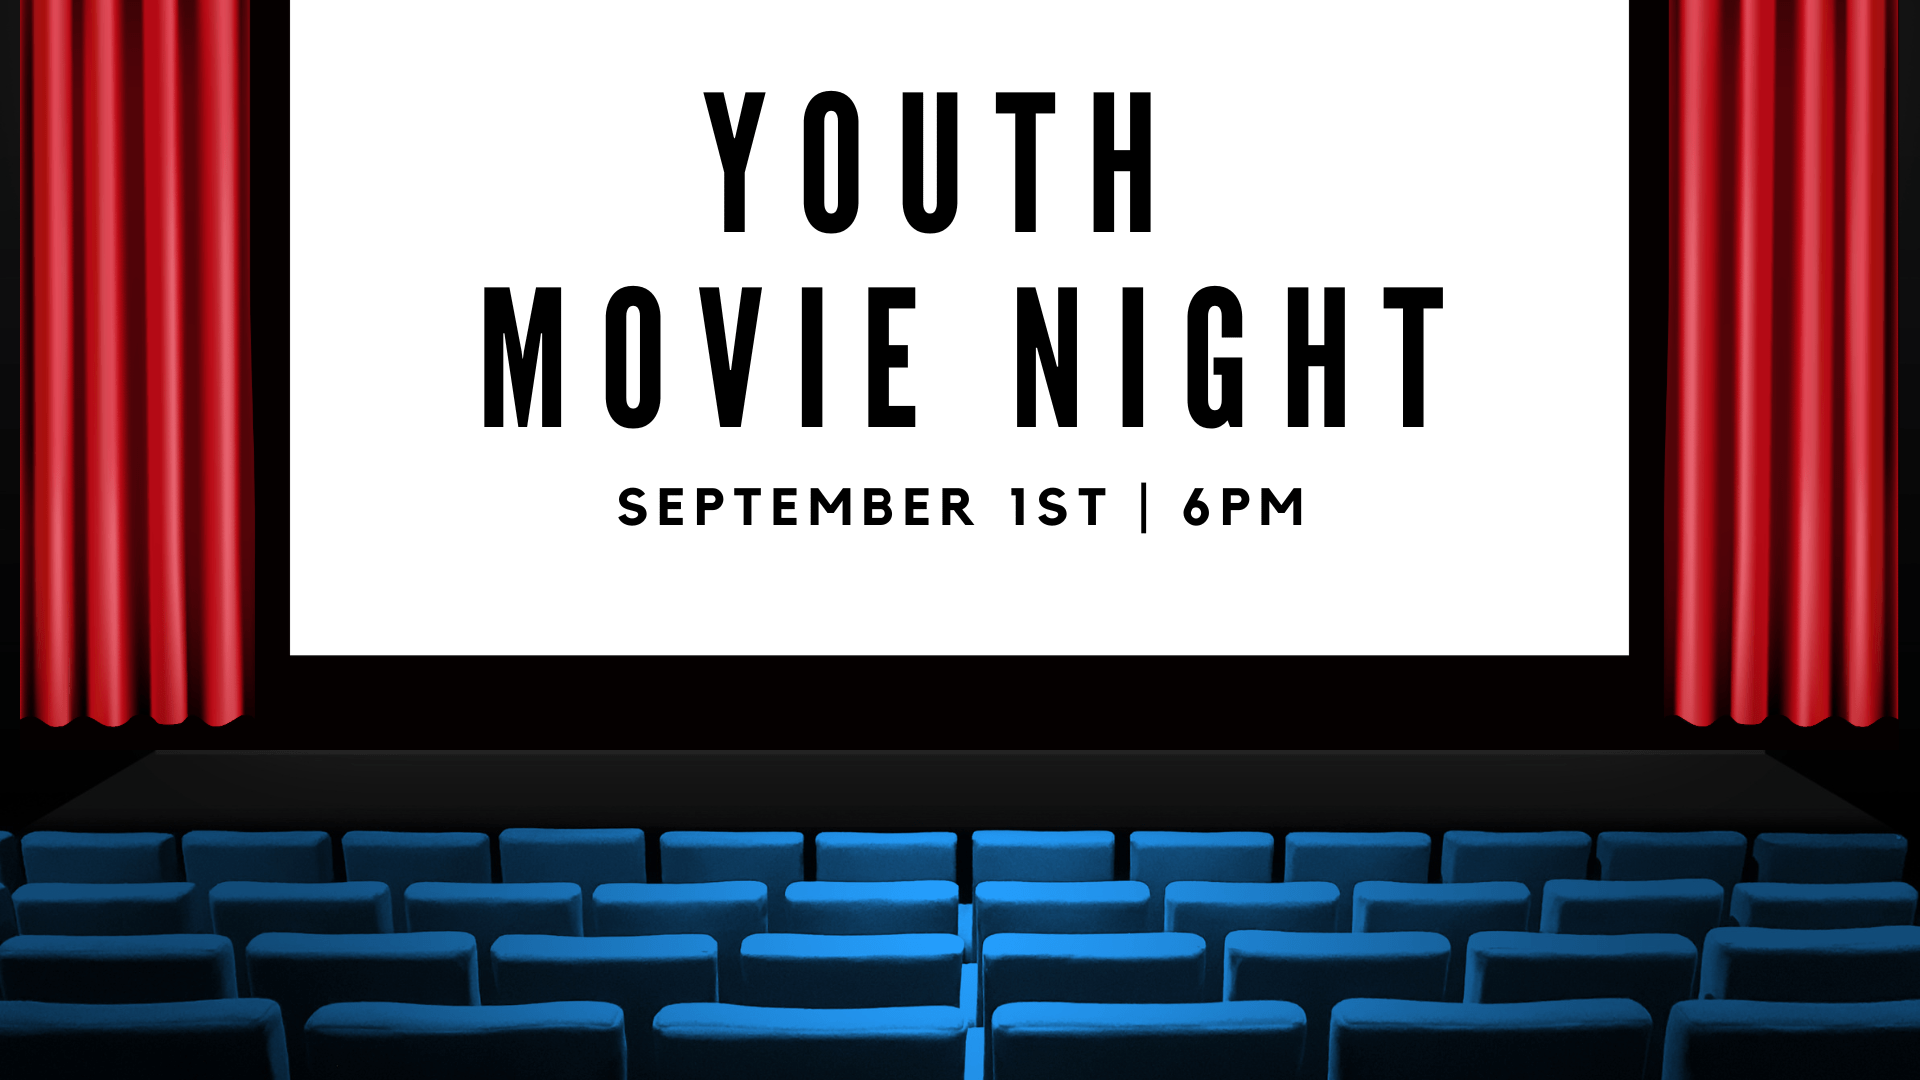 Youth Movie